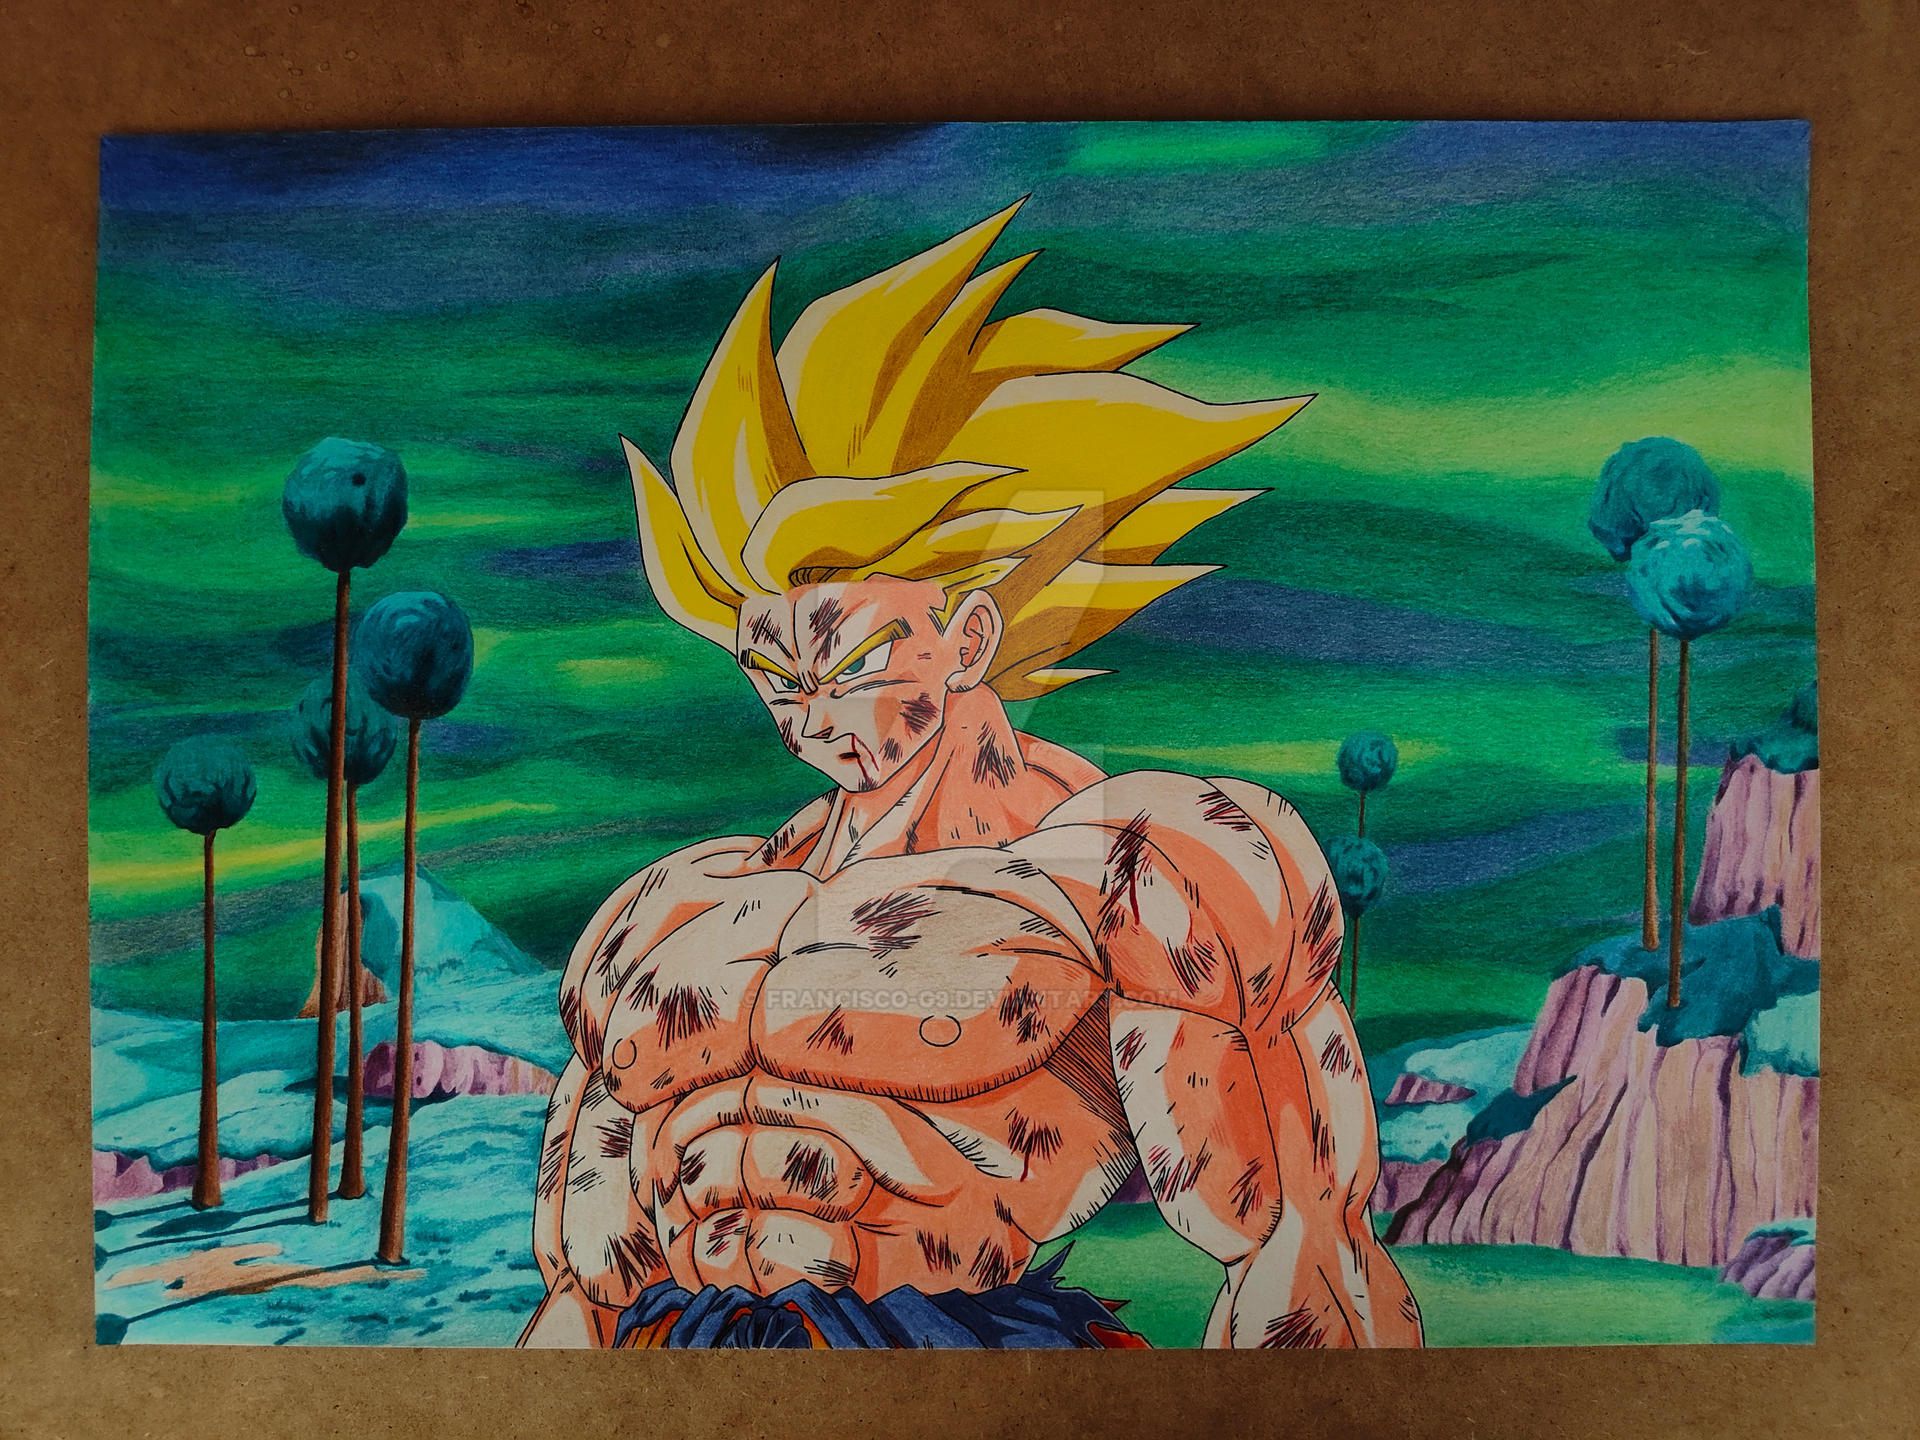 Dibujo de Goku en Super Saiyan en Namek by Francisco-G9 on DeviantArt